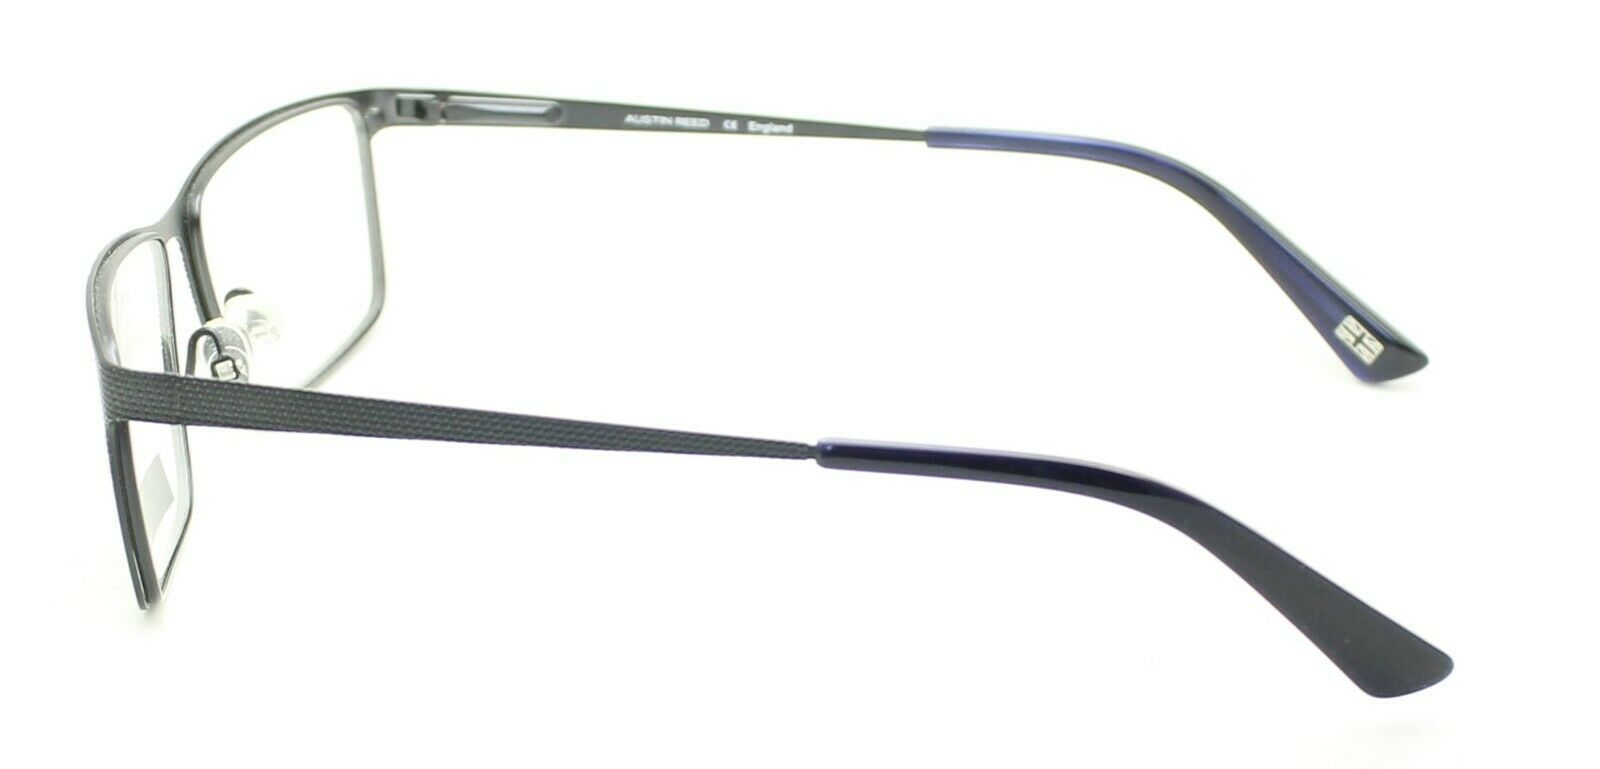 AUSTIN REED ENGLAND AR P07 Upminster 54mm Eyewear RX Optical FRAMES Glasses New